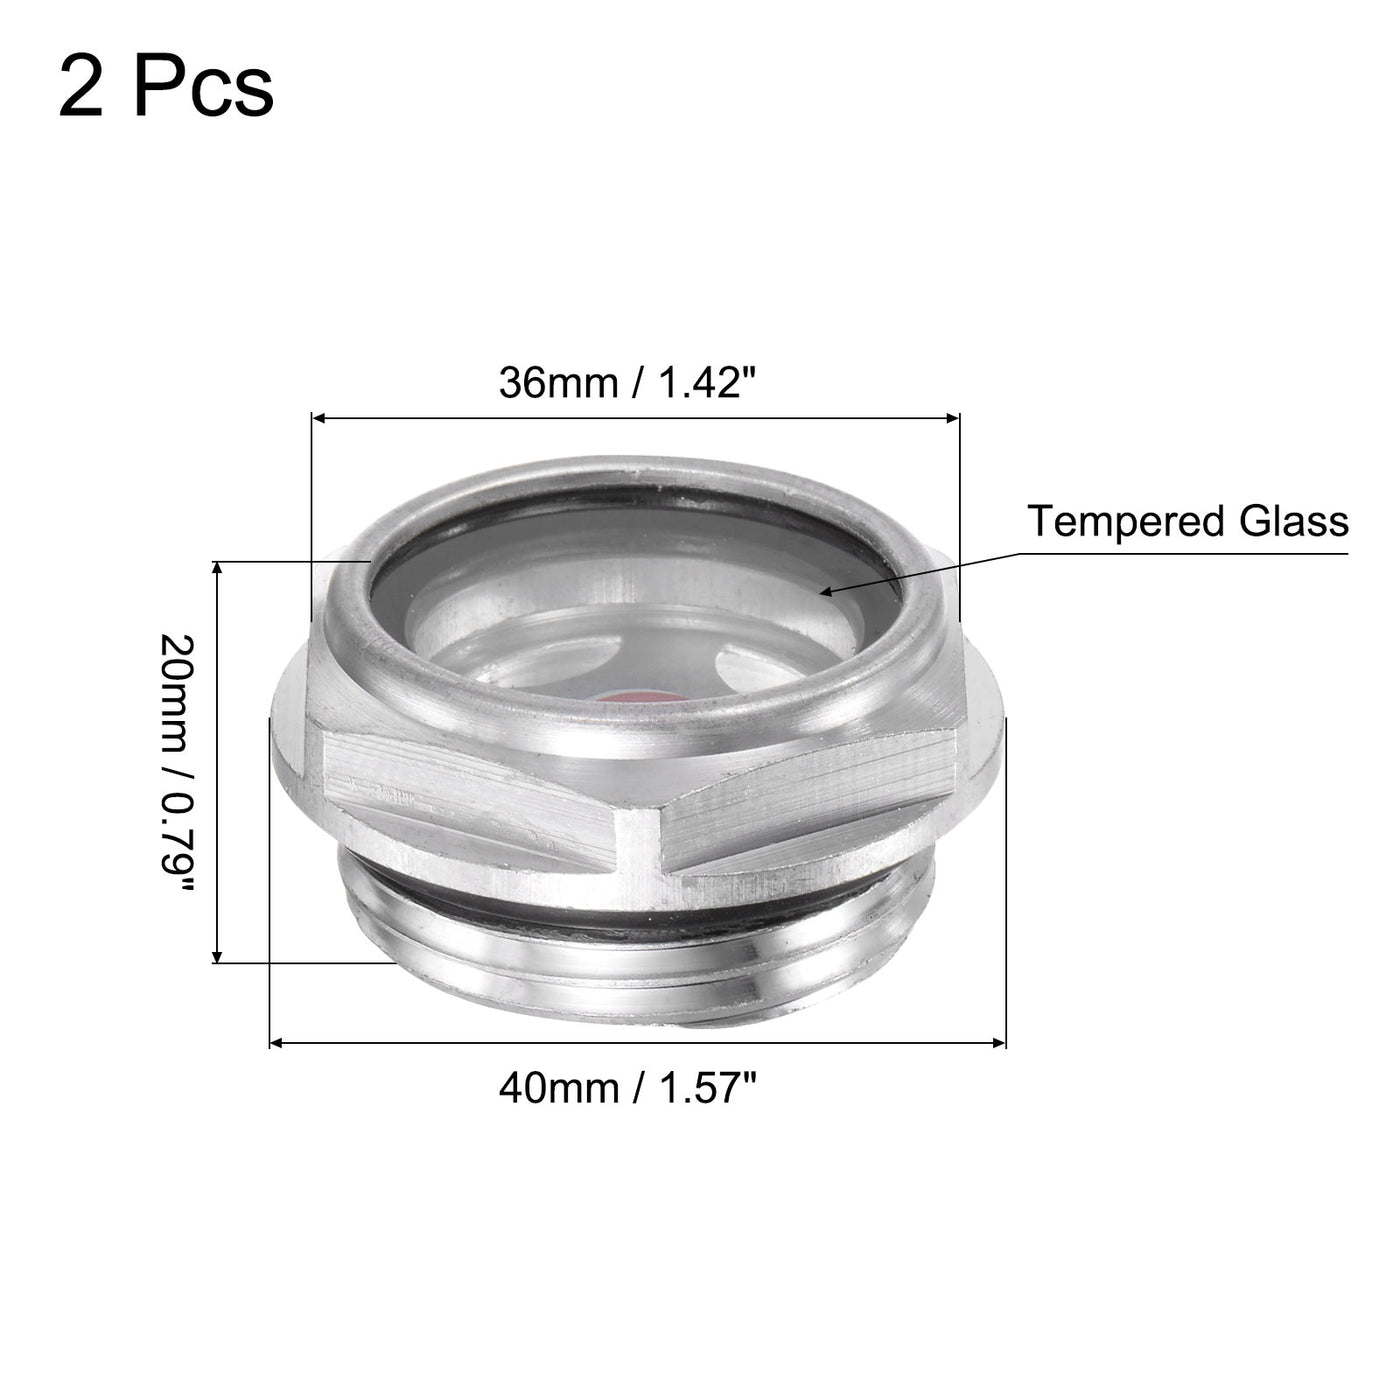 uxcell Uxcell Air Compressor Oil Level Gauge Sight Glass G1 Male Thread Aluminum 2Pcs